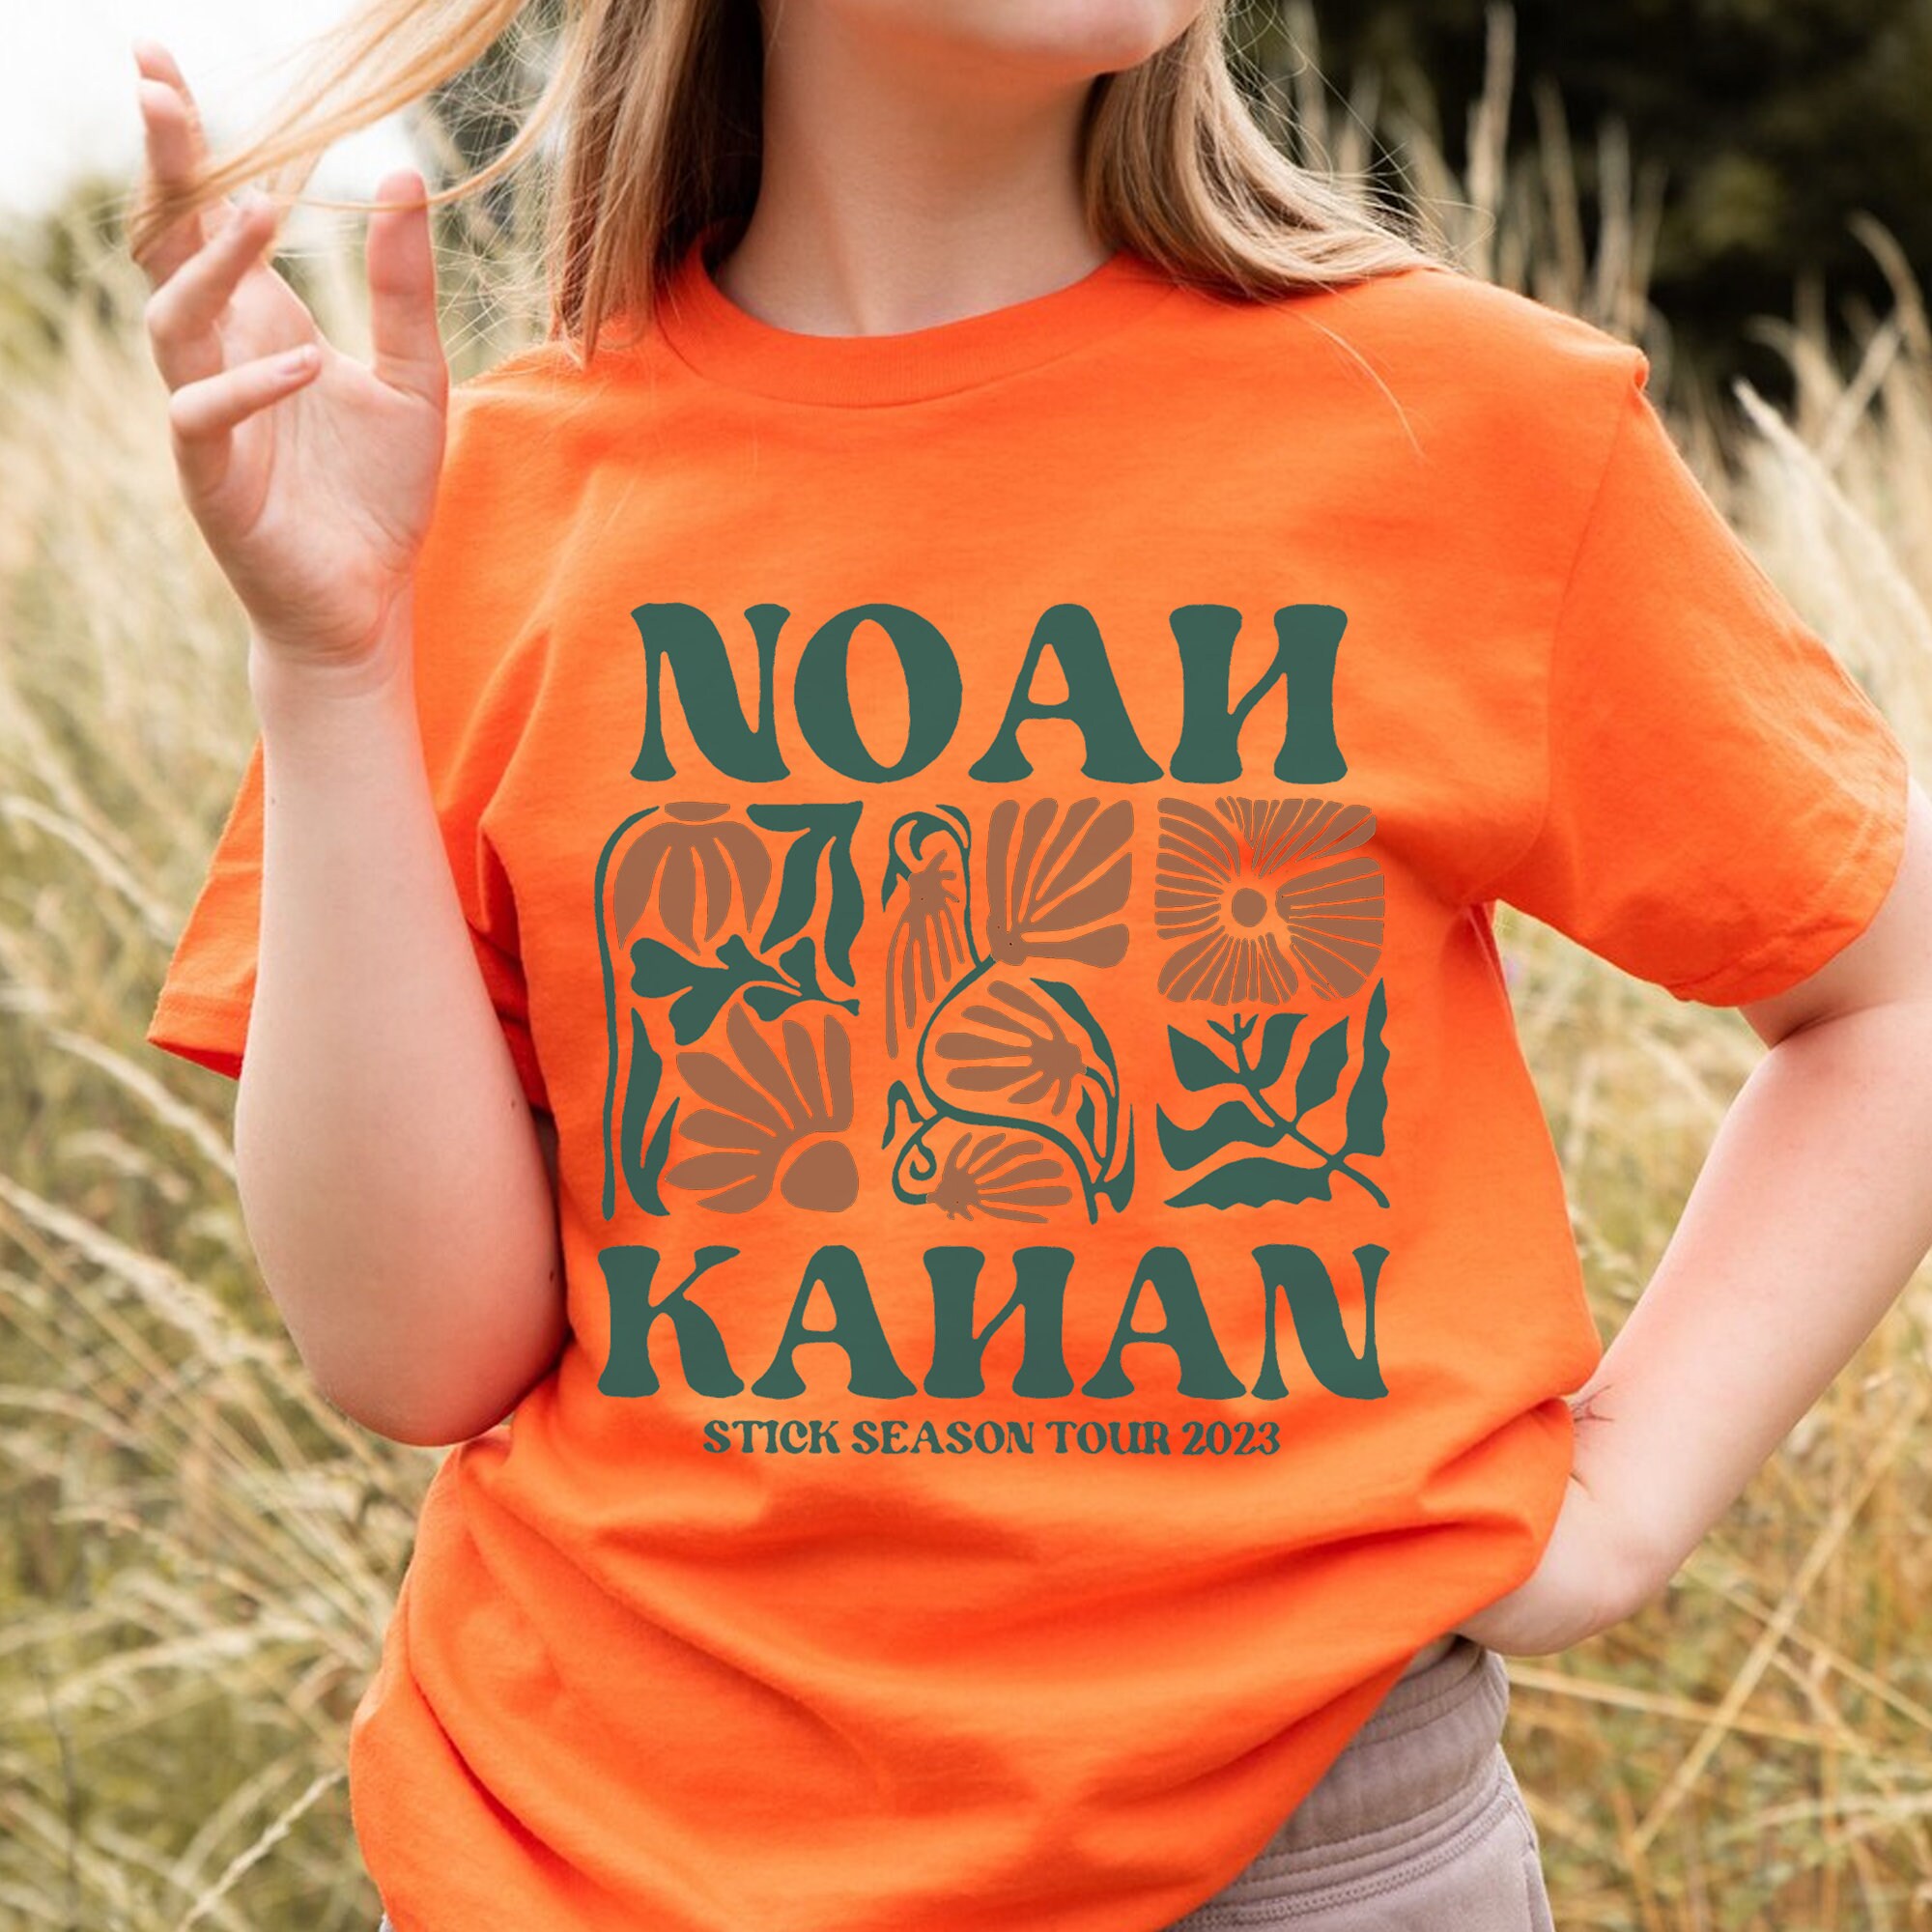 Everywhere Everything Noah Kahan Shirt Sticky Season Tour 2023